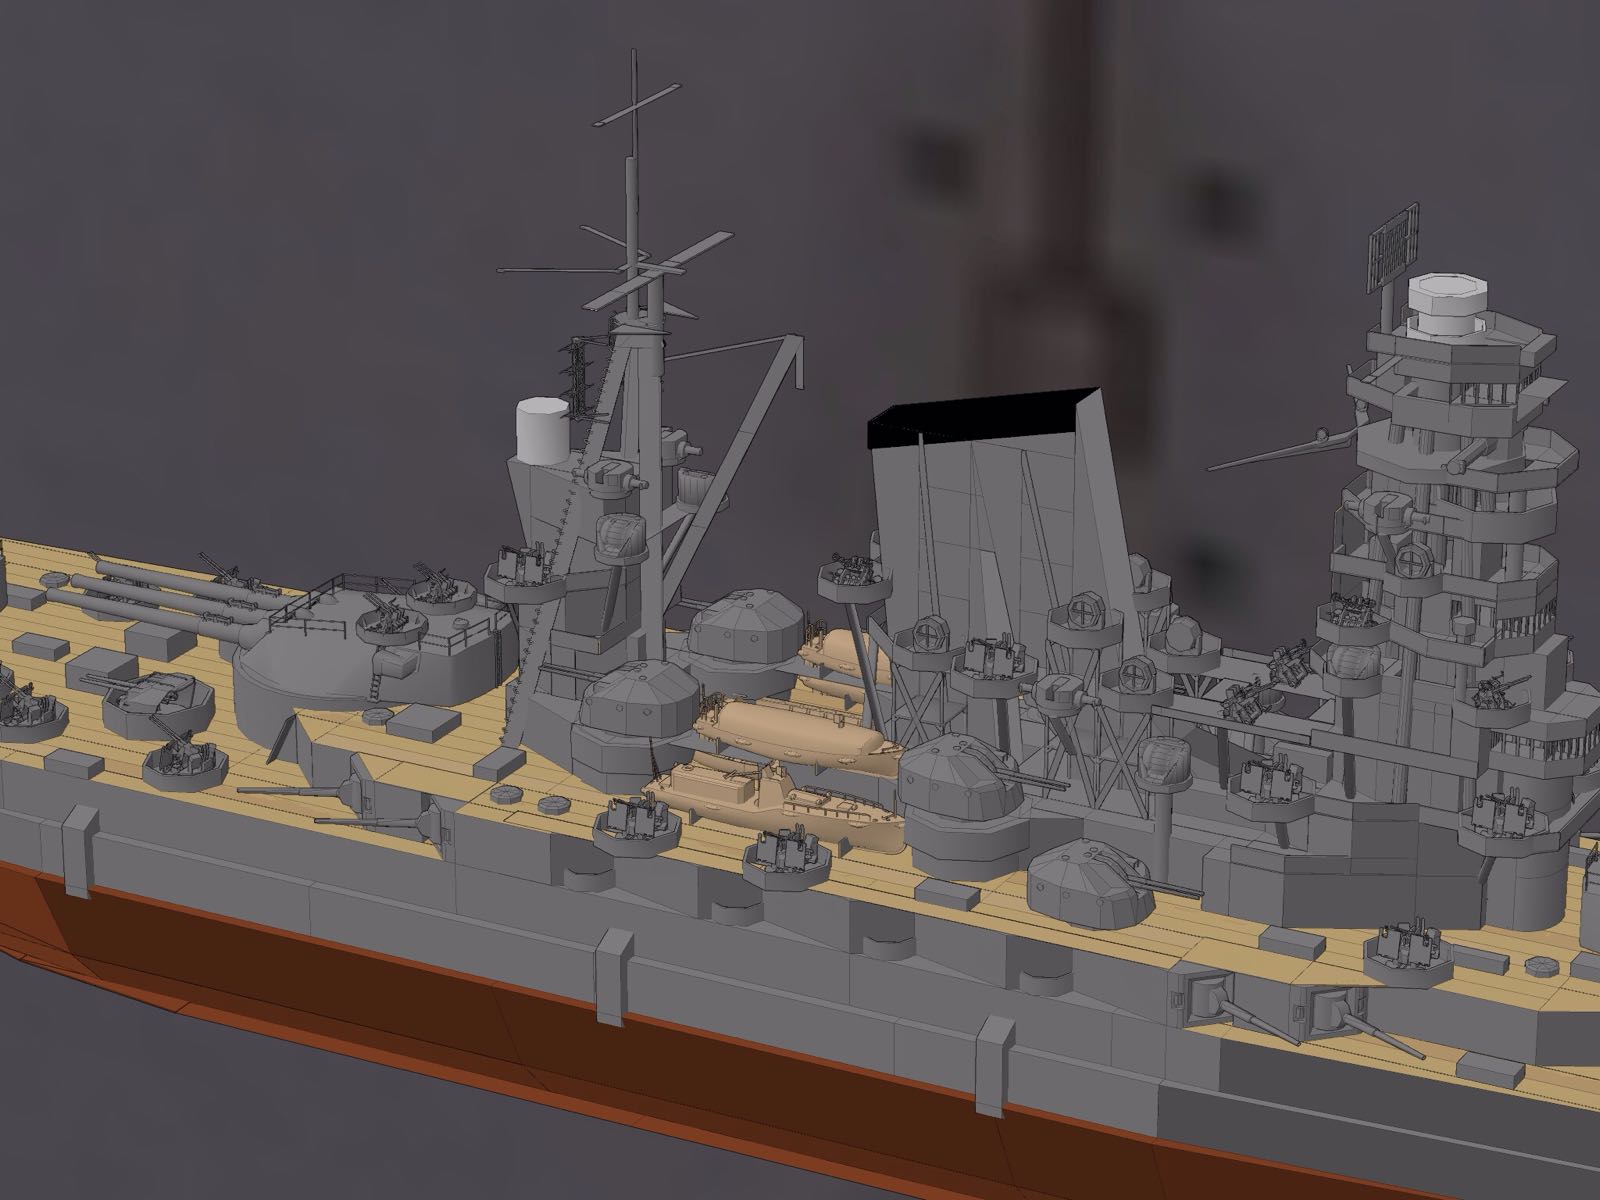 warship craft apk